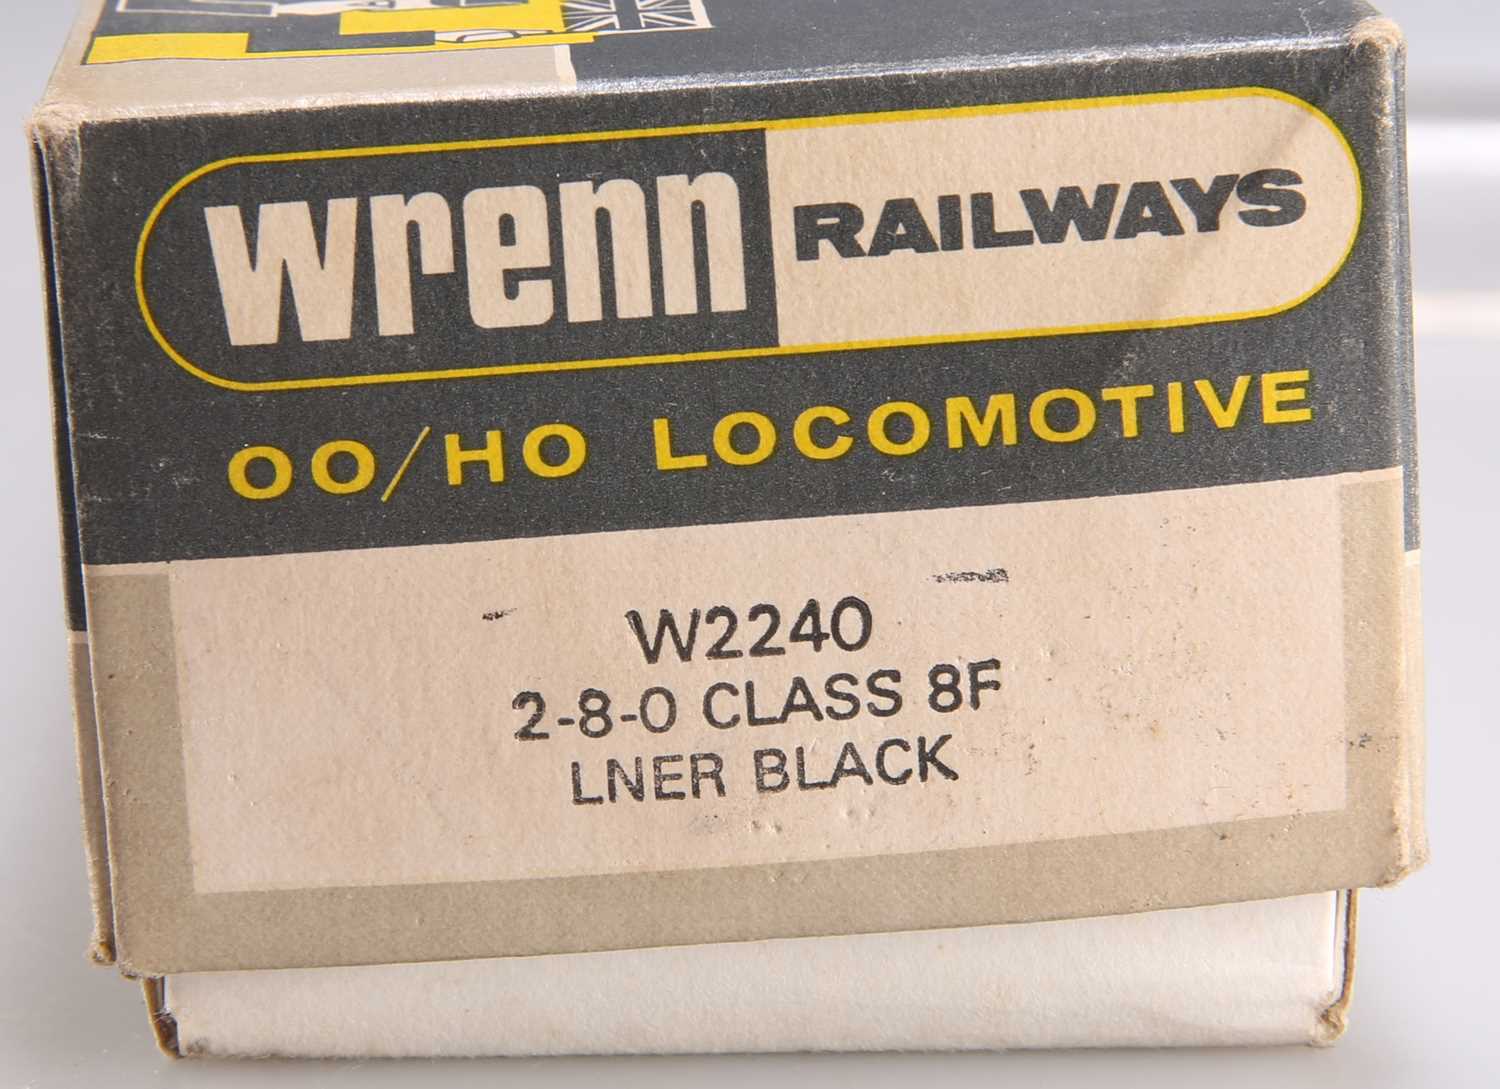 A WRENN W2240 2-8-0 CLASS 8F LNER BLACK - Image 2 of 2